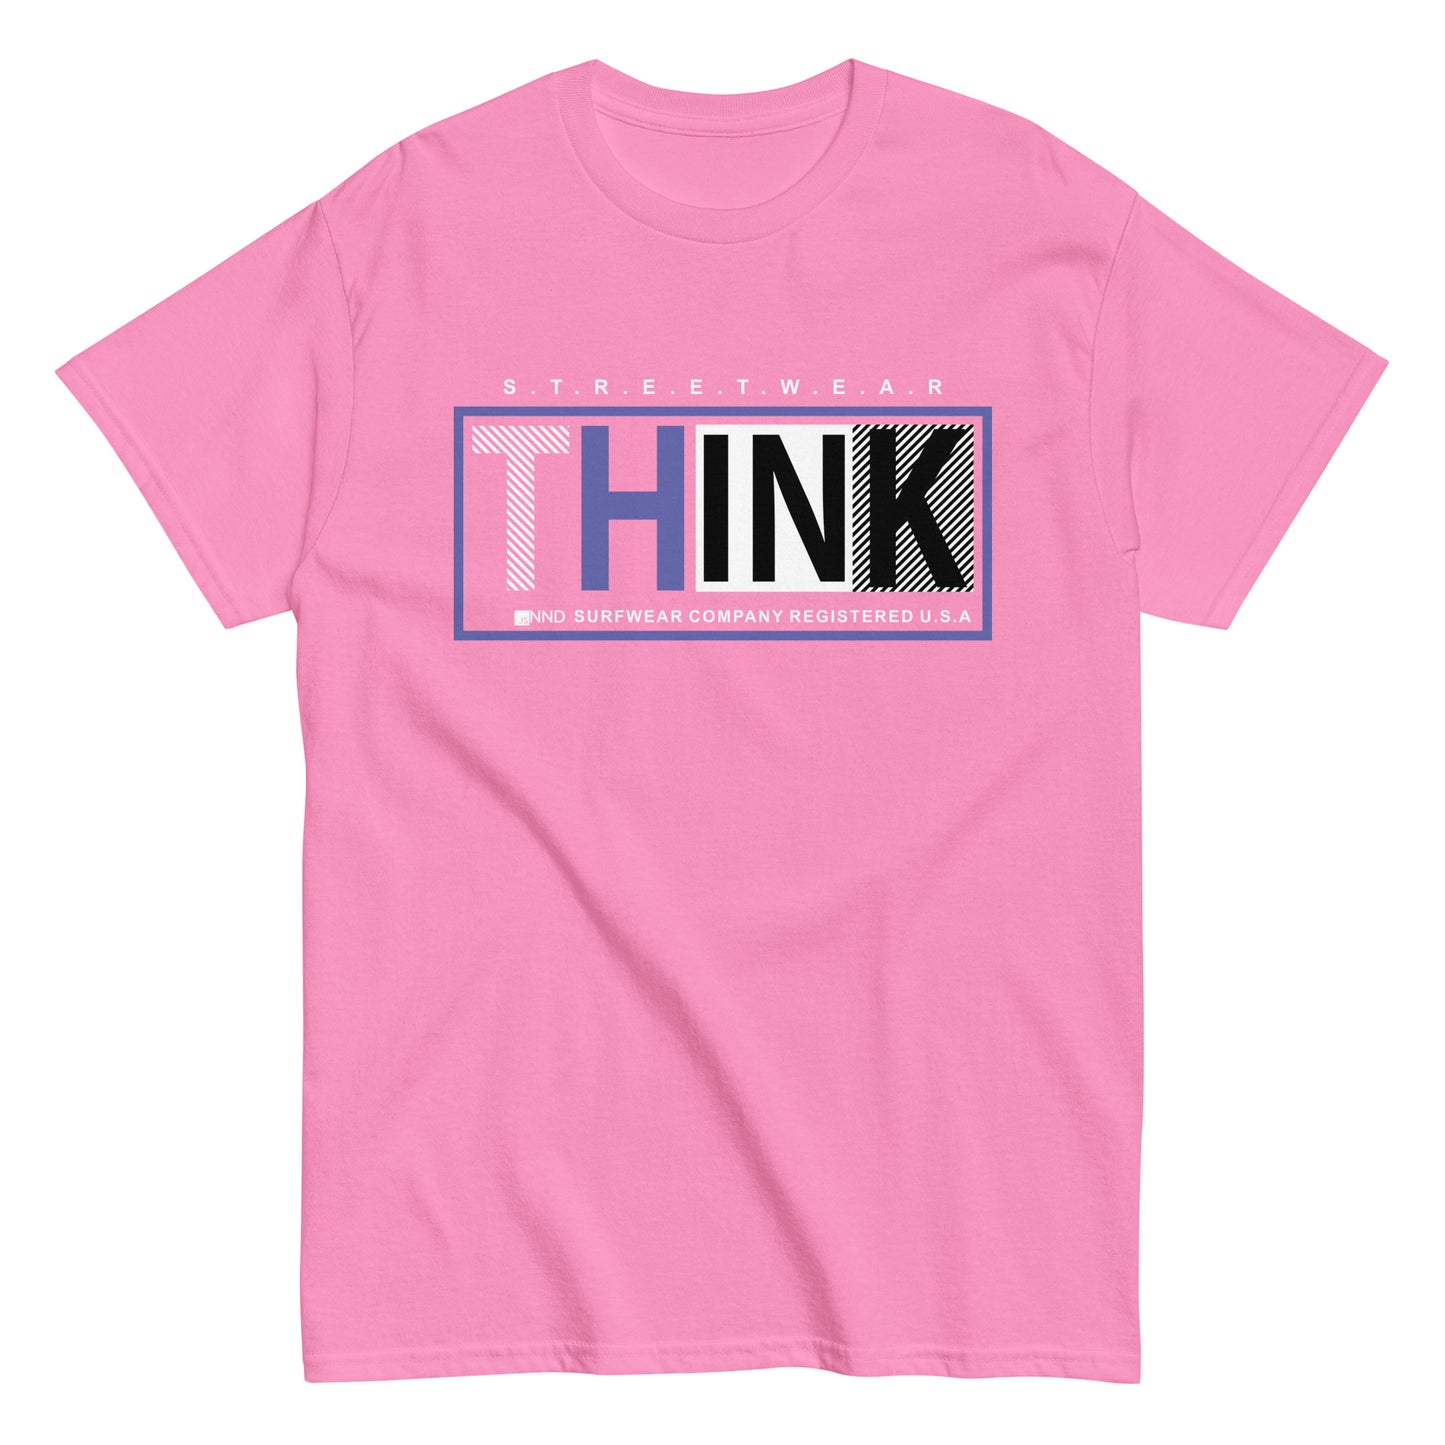 Think T-shirt